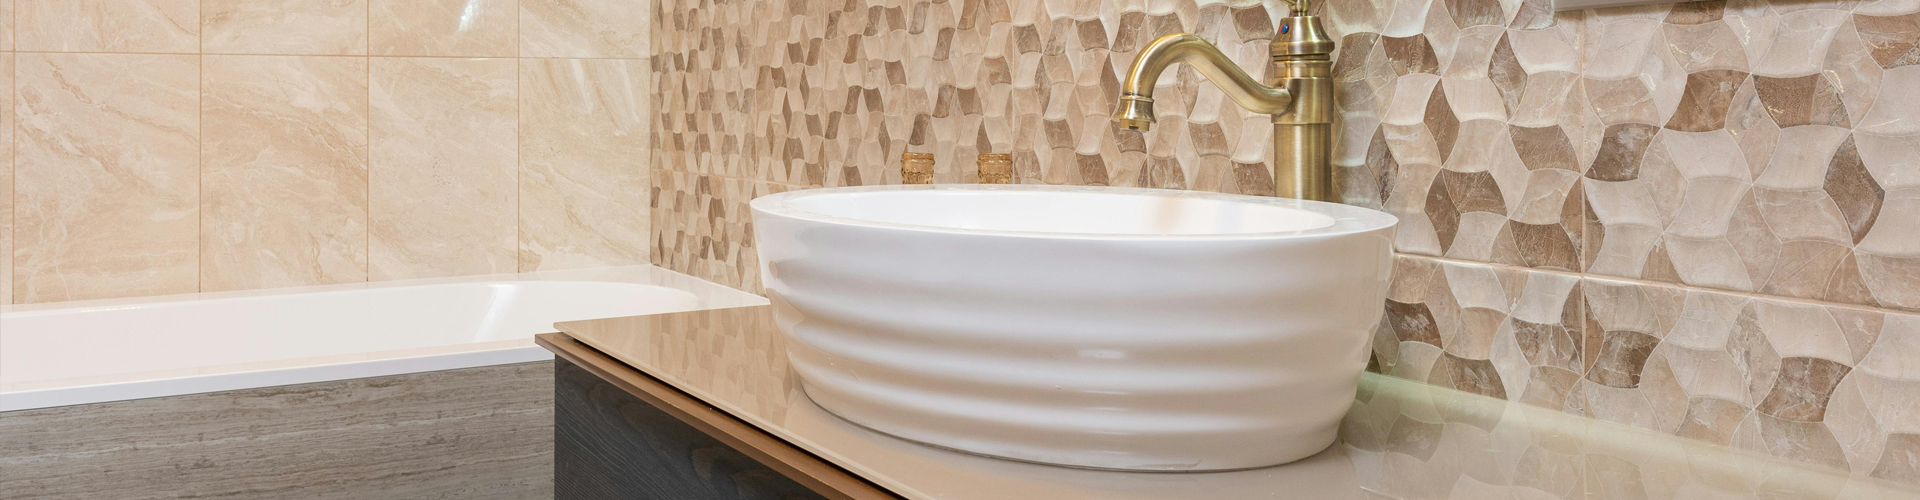 Expert tile design installers, Black and white tile pattern bathroom in Baltimore, Maryland